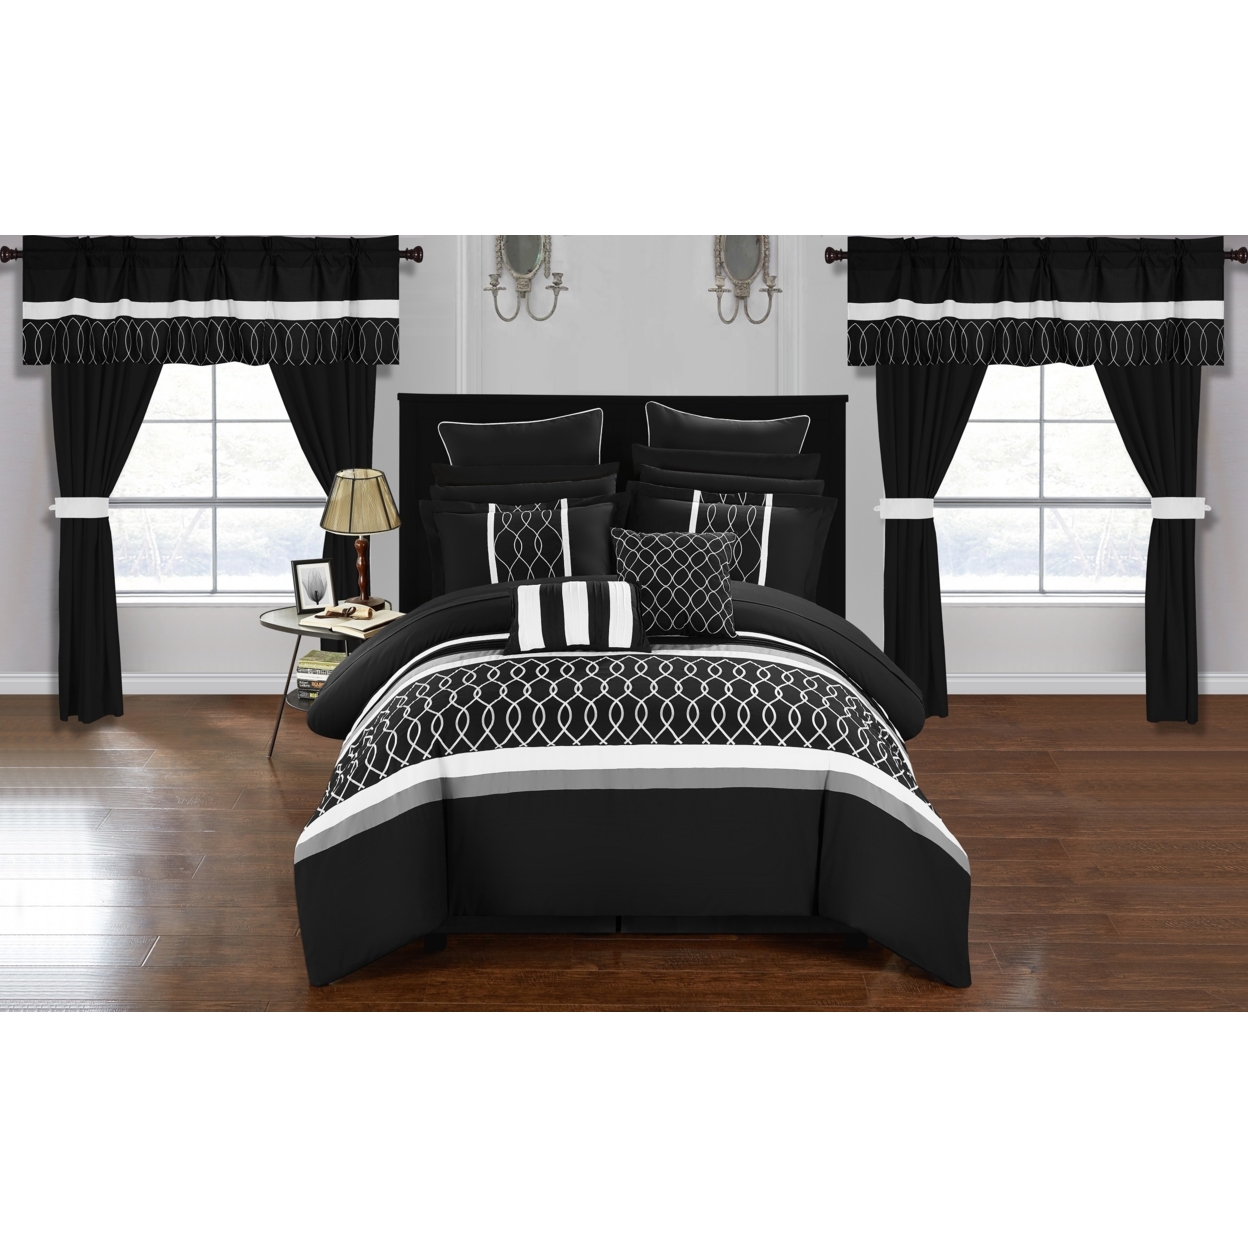 Topaz 24 Piece Comforter Bed In A Bag Pleated Ruffled Designer Embellished Bedding Set - Navy, King